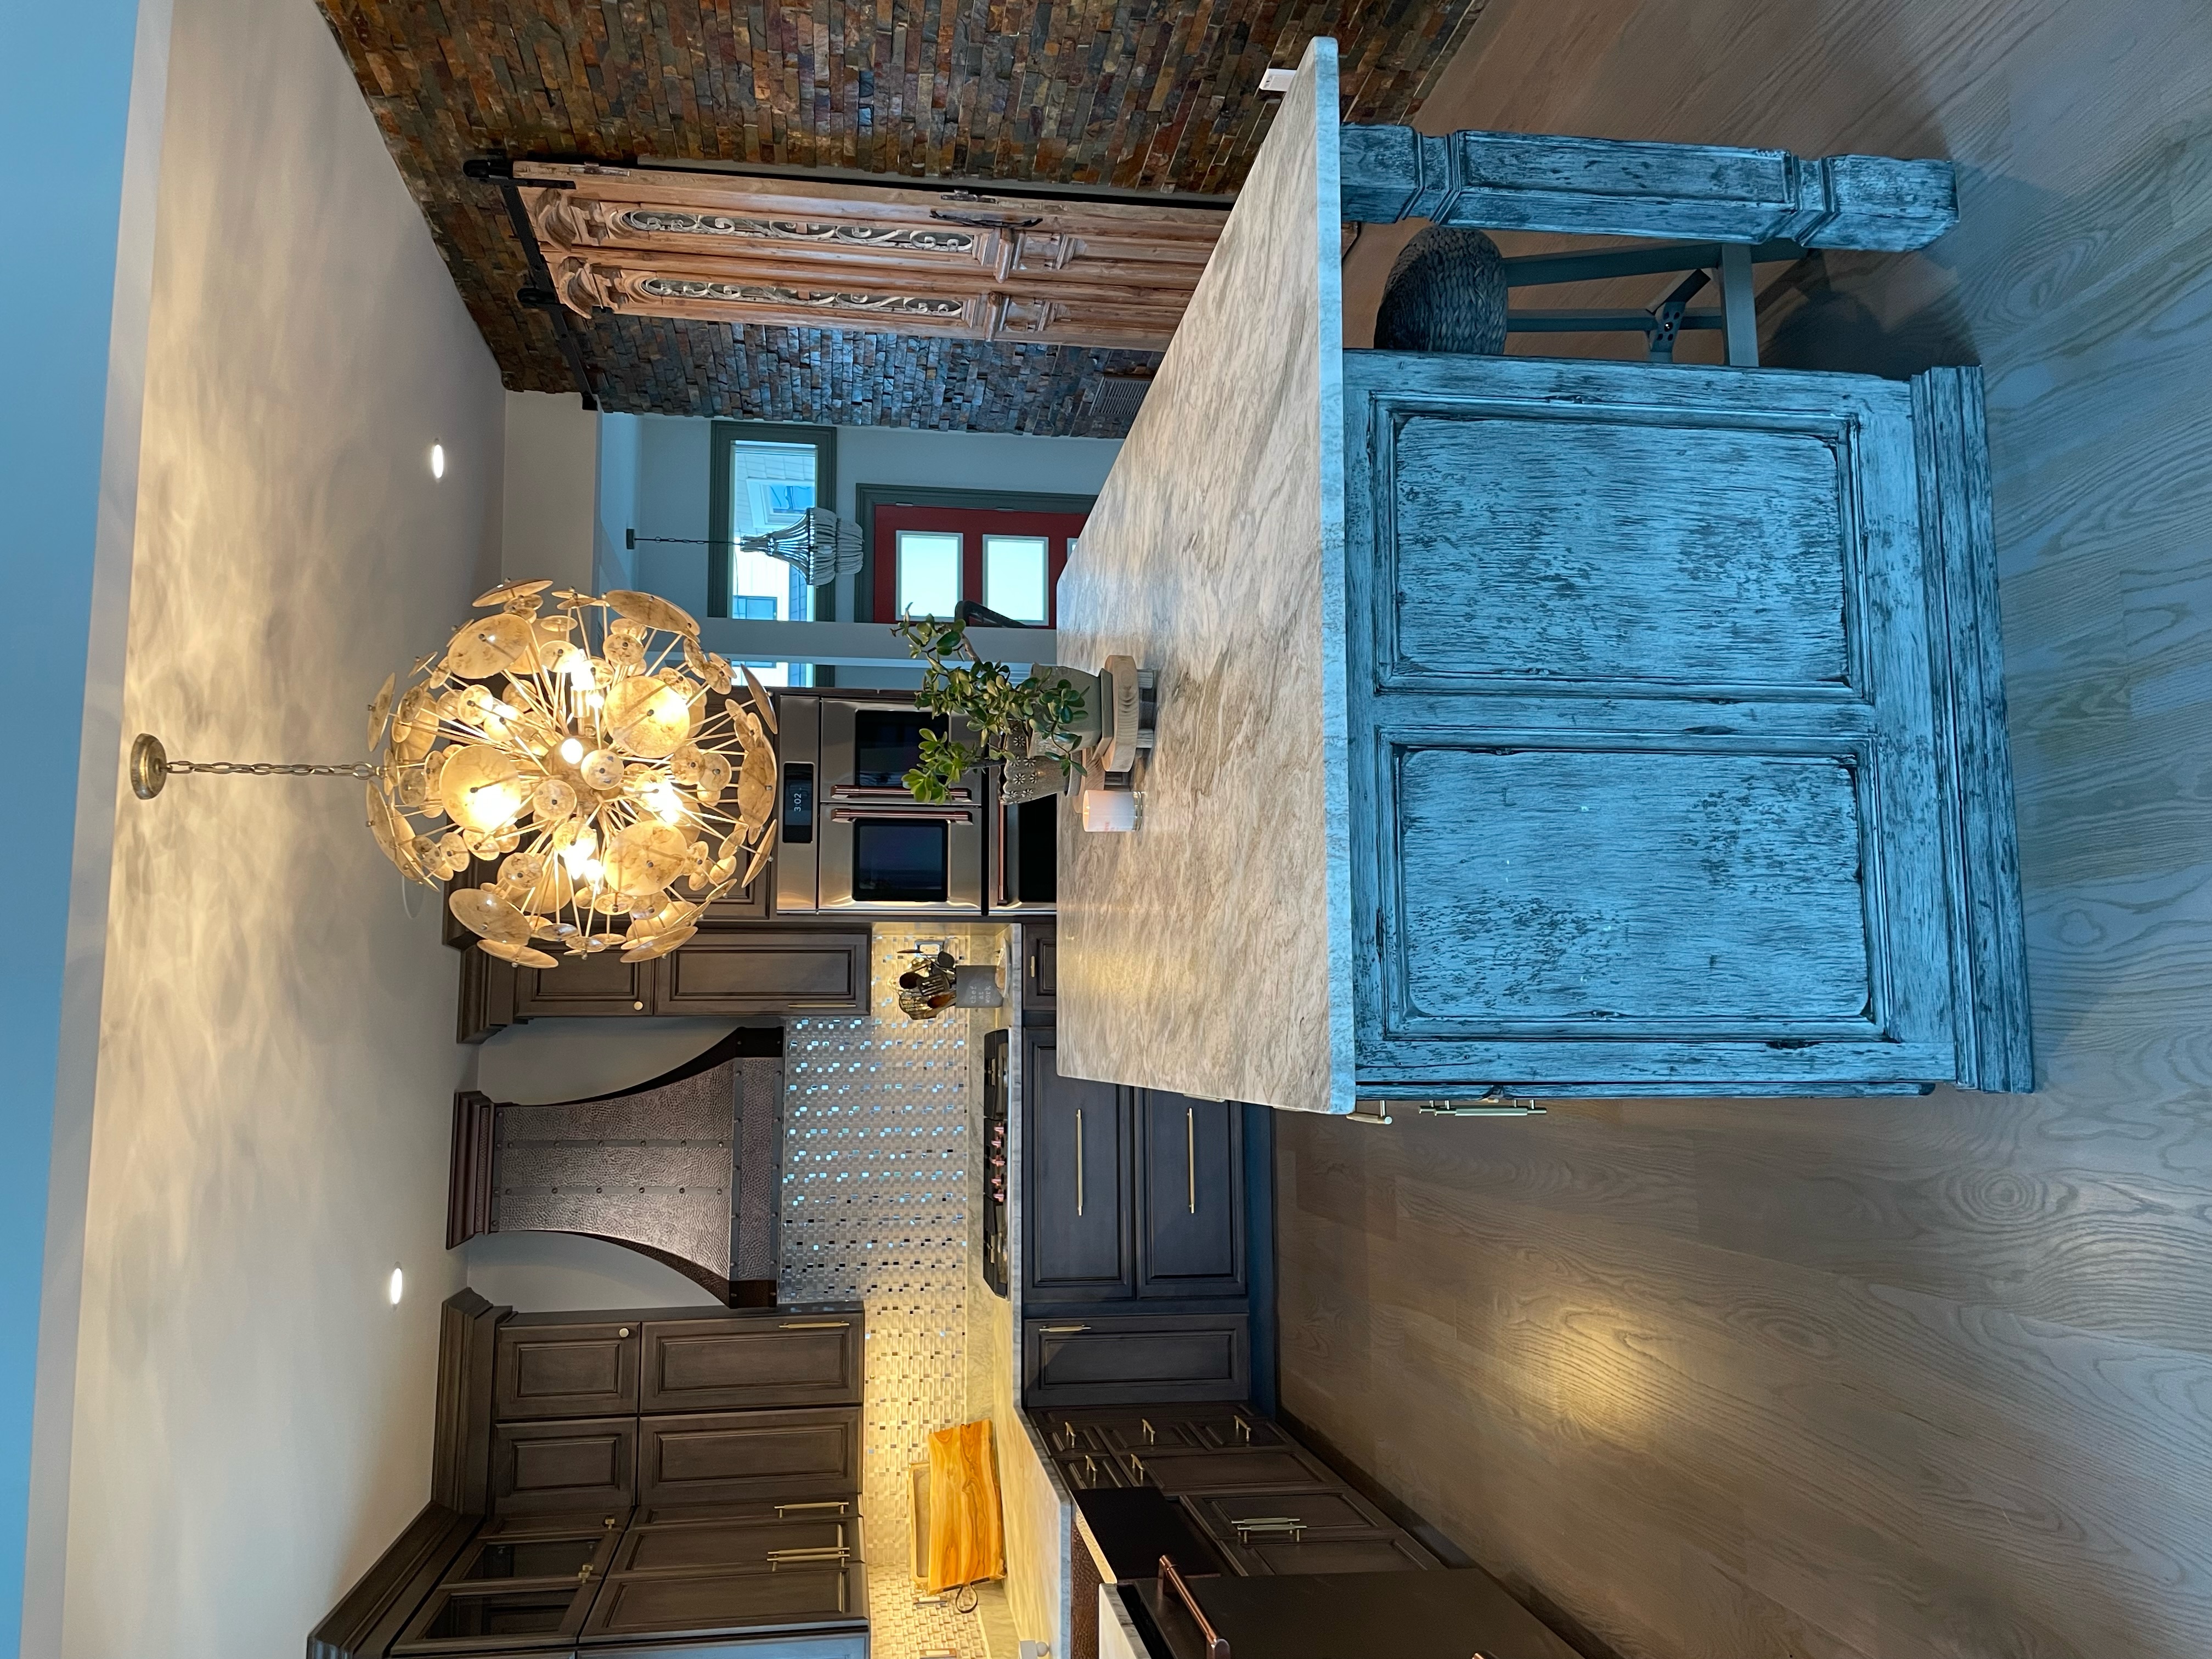 Charming kitchen design idea cottage-inspired touch, featuring brown kitchen cabinets, kitchen countertops, stunning marble backsplash, creative kitchen table idea